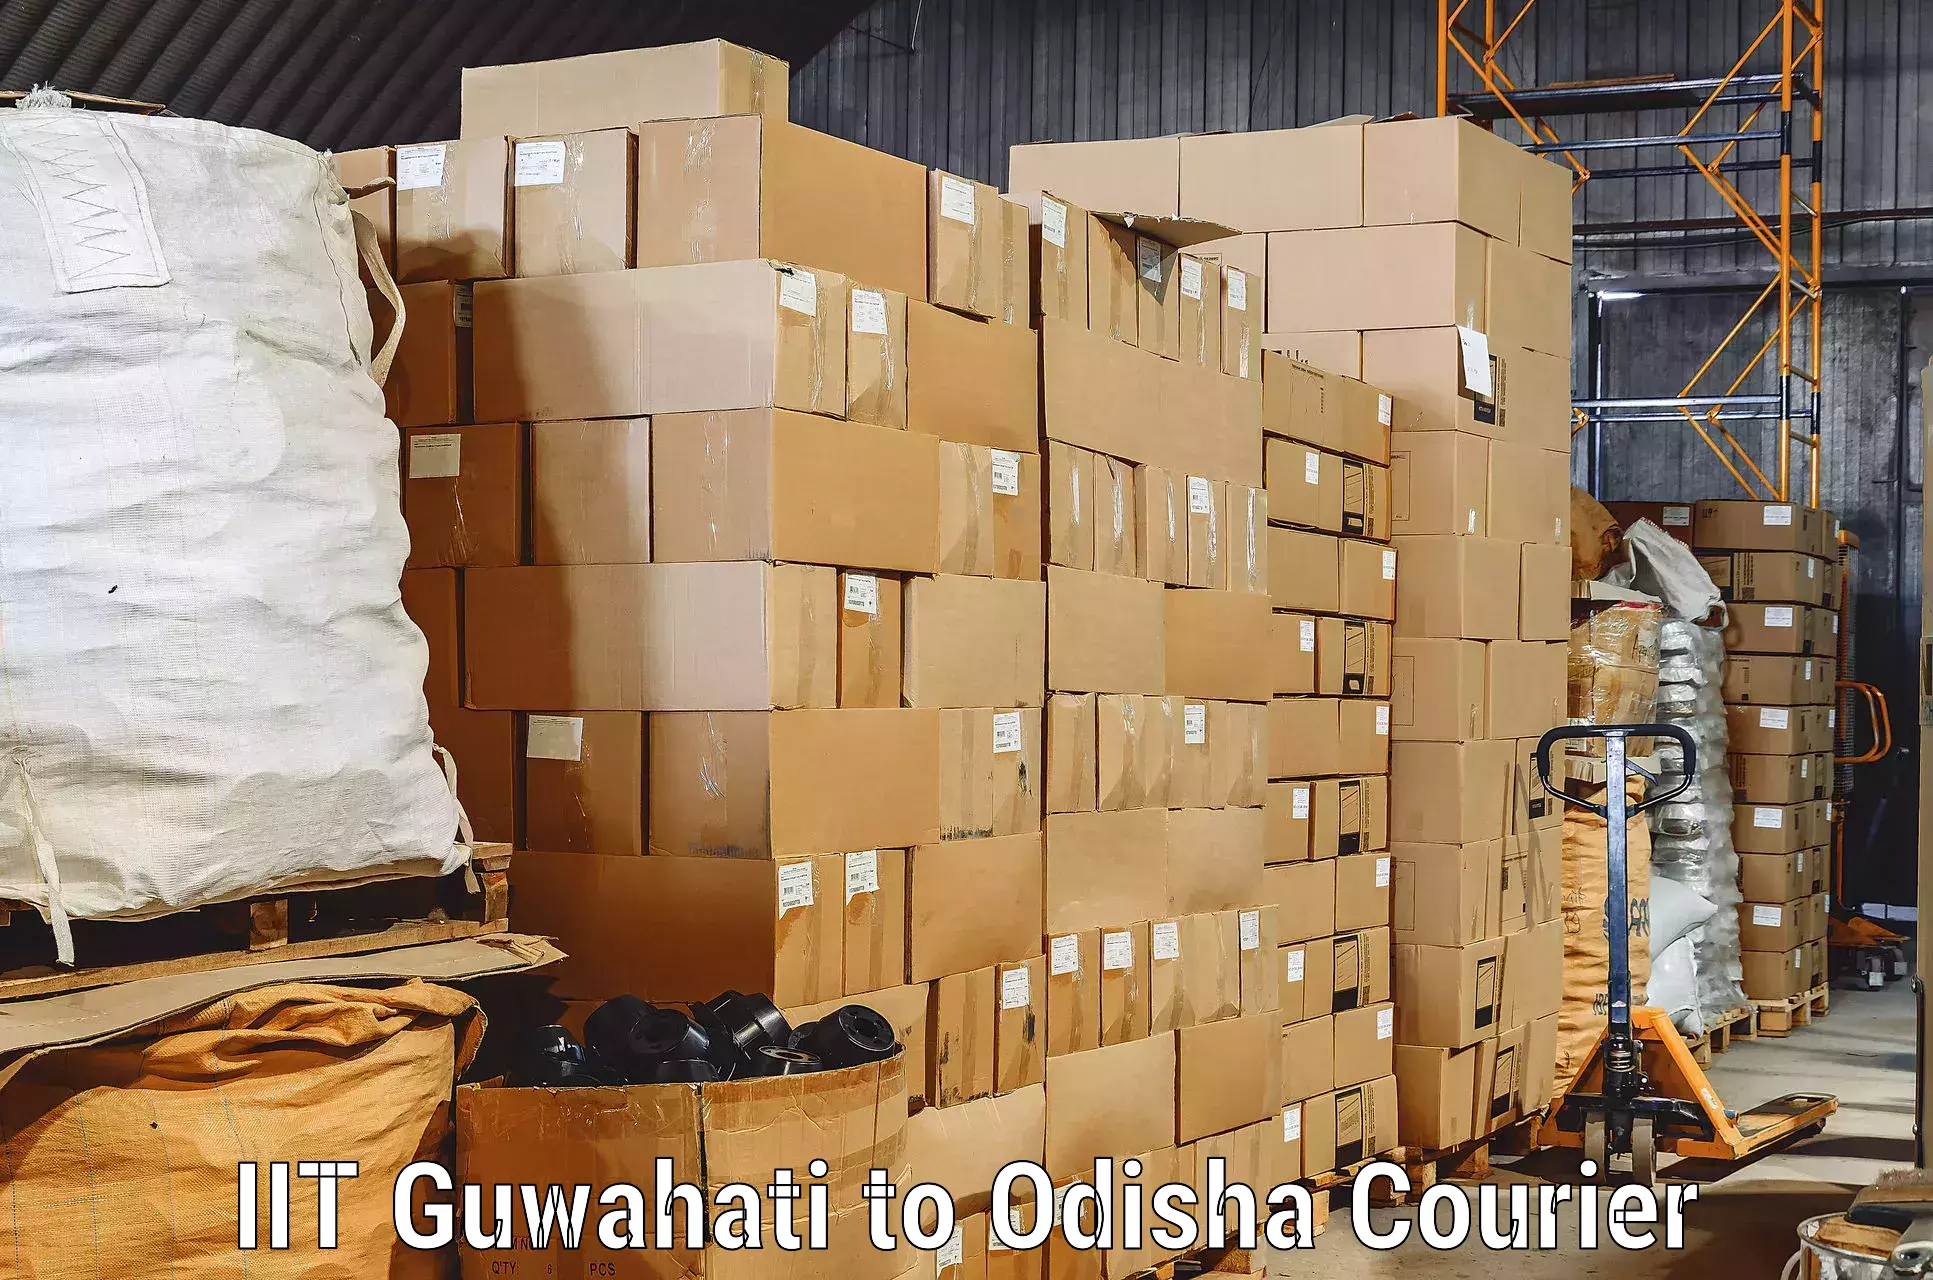 Trusted moving company IIT Guwahati to Phulbani